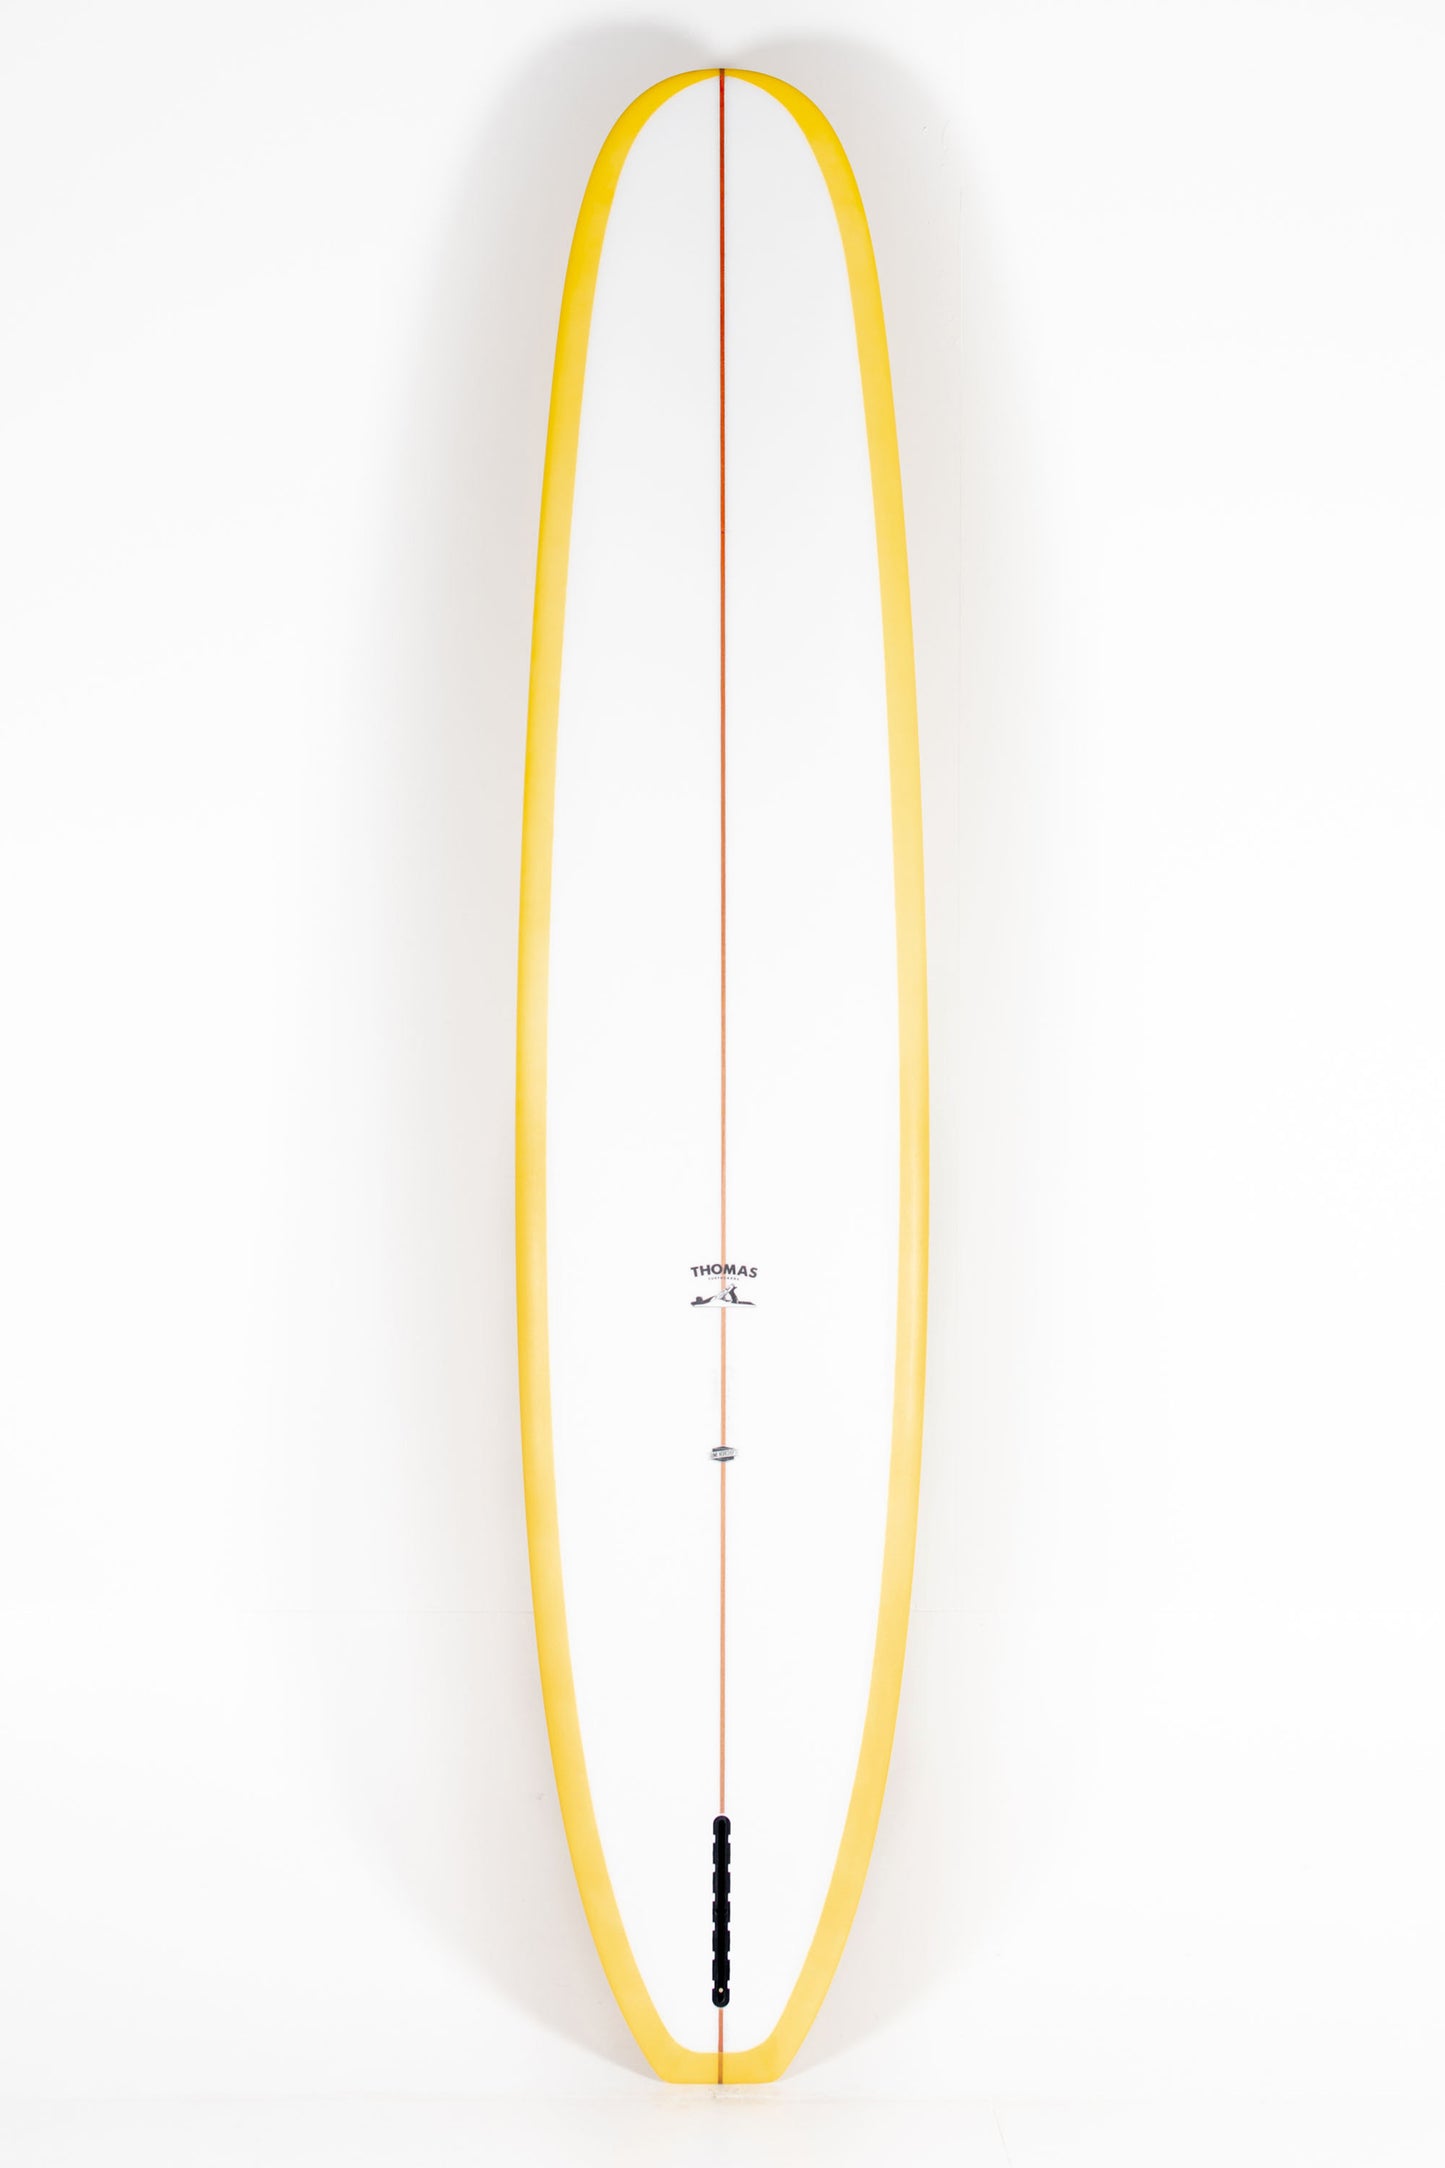 
                  
                    Thomas Surfboards - KEEPER - 9'6"x 23 x 3
                  
                